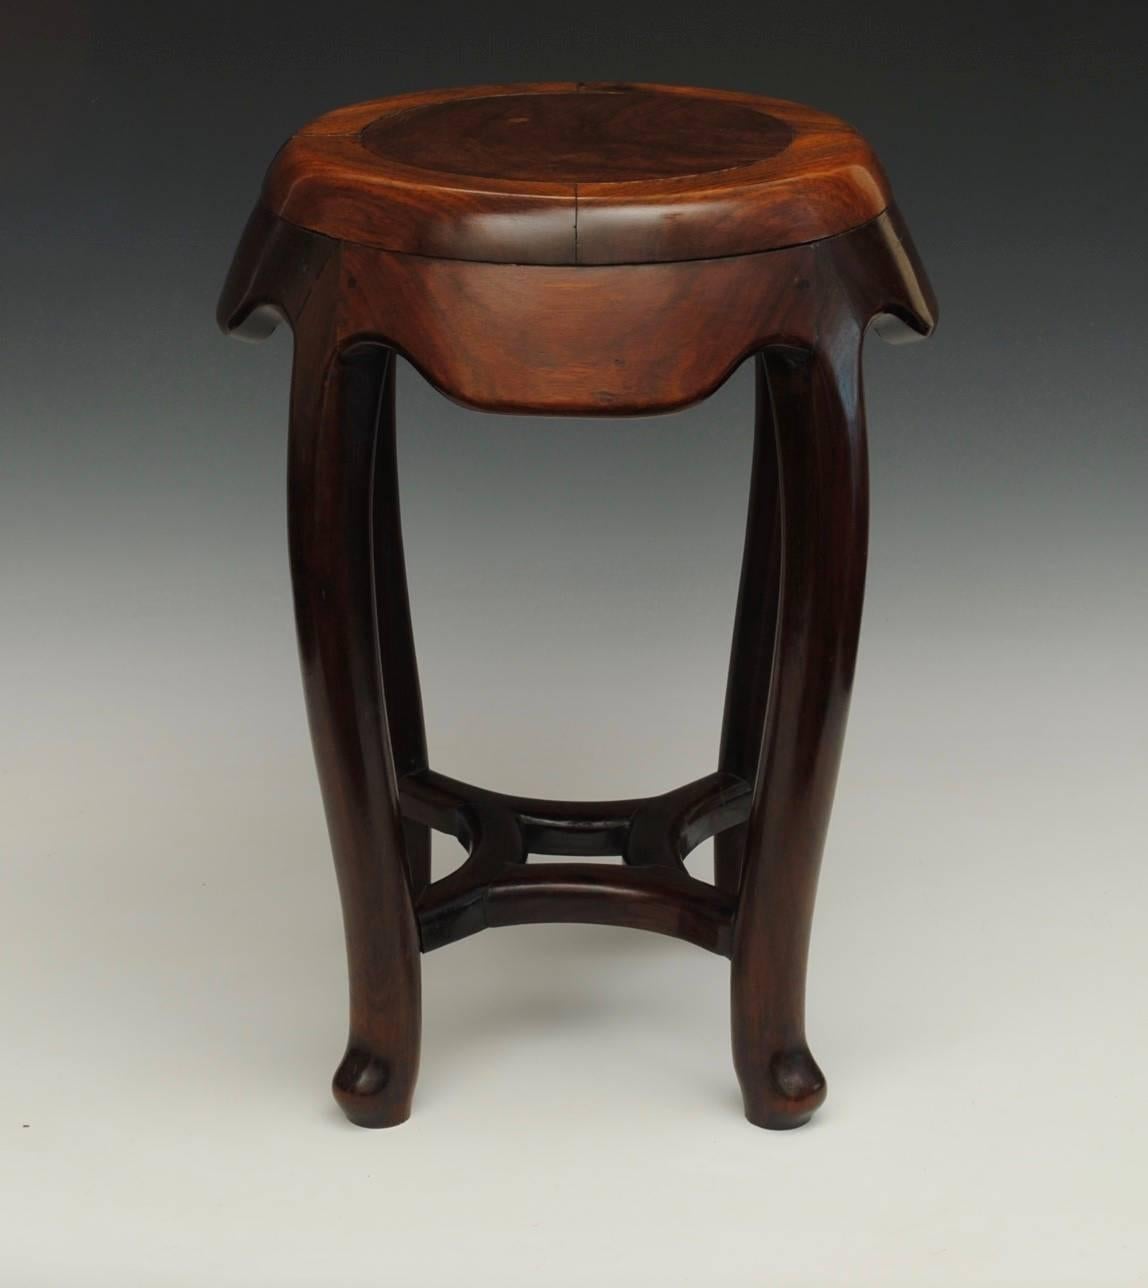 An elegant Chinese hardwood barrel stool.